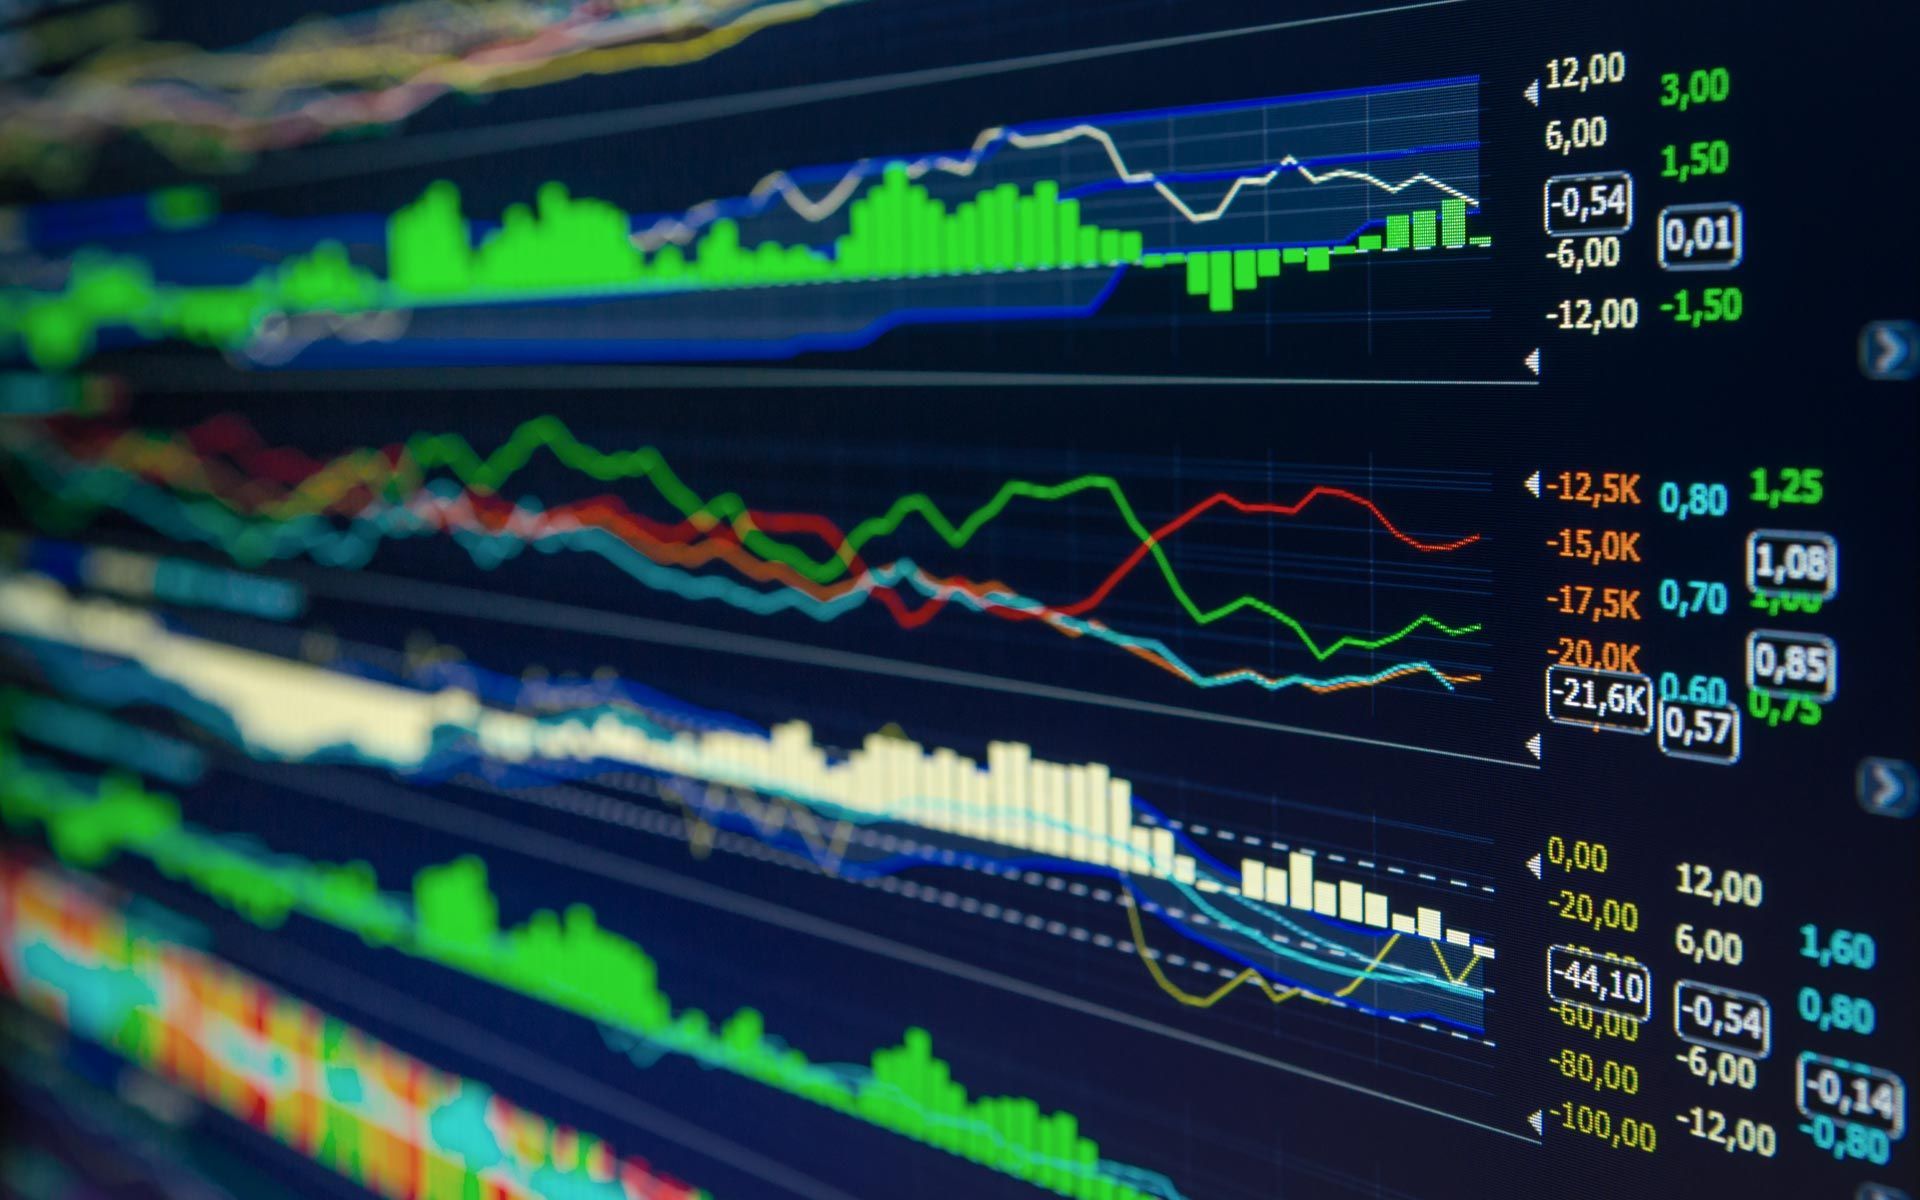 Stock Market Desktop Background. iOS 7 Stock Wallpaper, BlackBerry Stock Wallpaper and Mac Stock Wallpaper